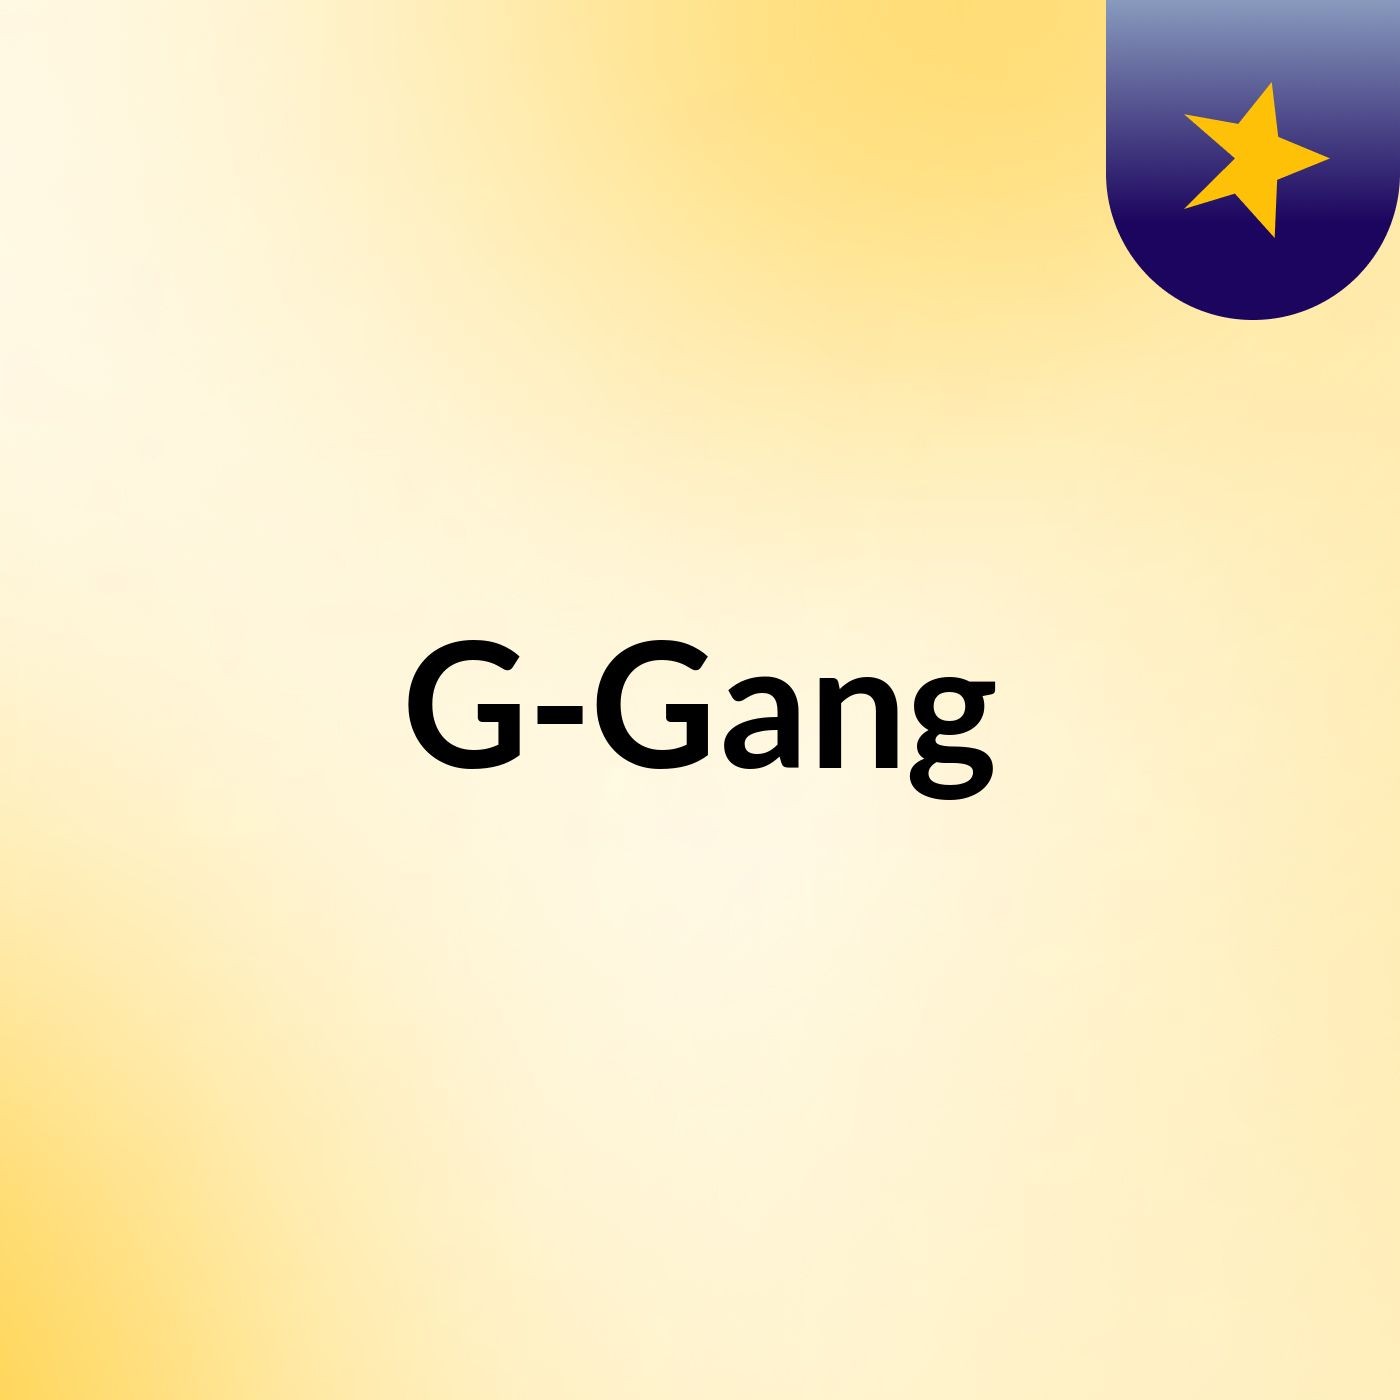 G-Gang